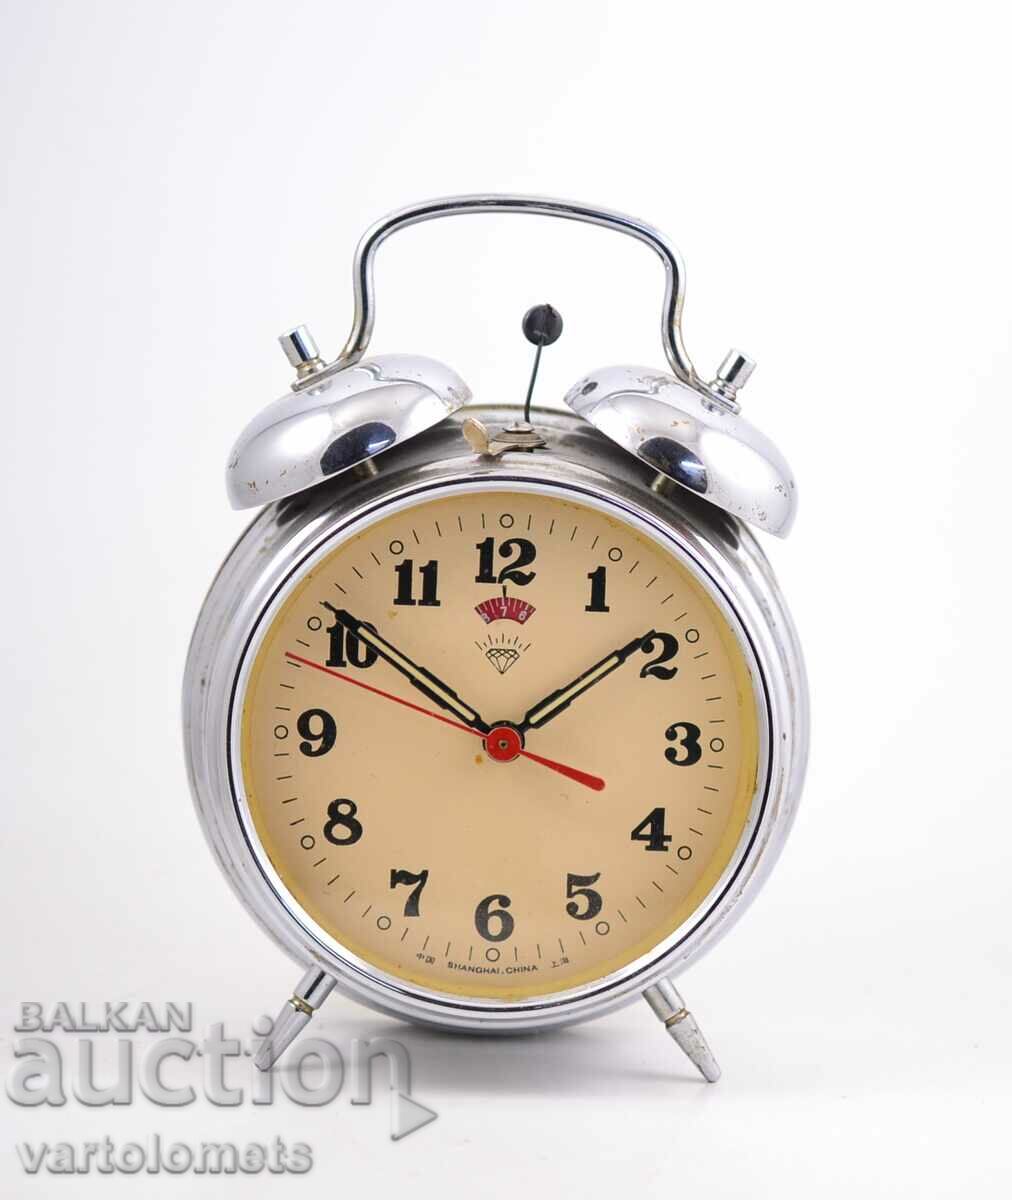 Alarm clock DIAMOND CHANGHAI CHINA - works